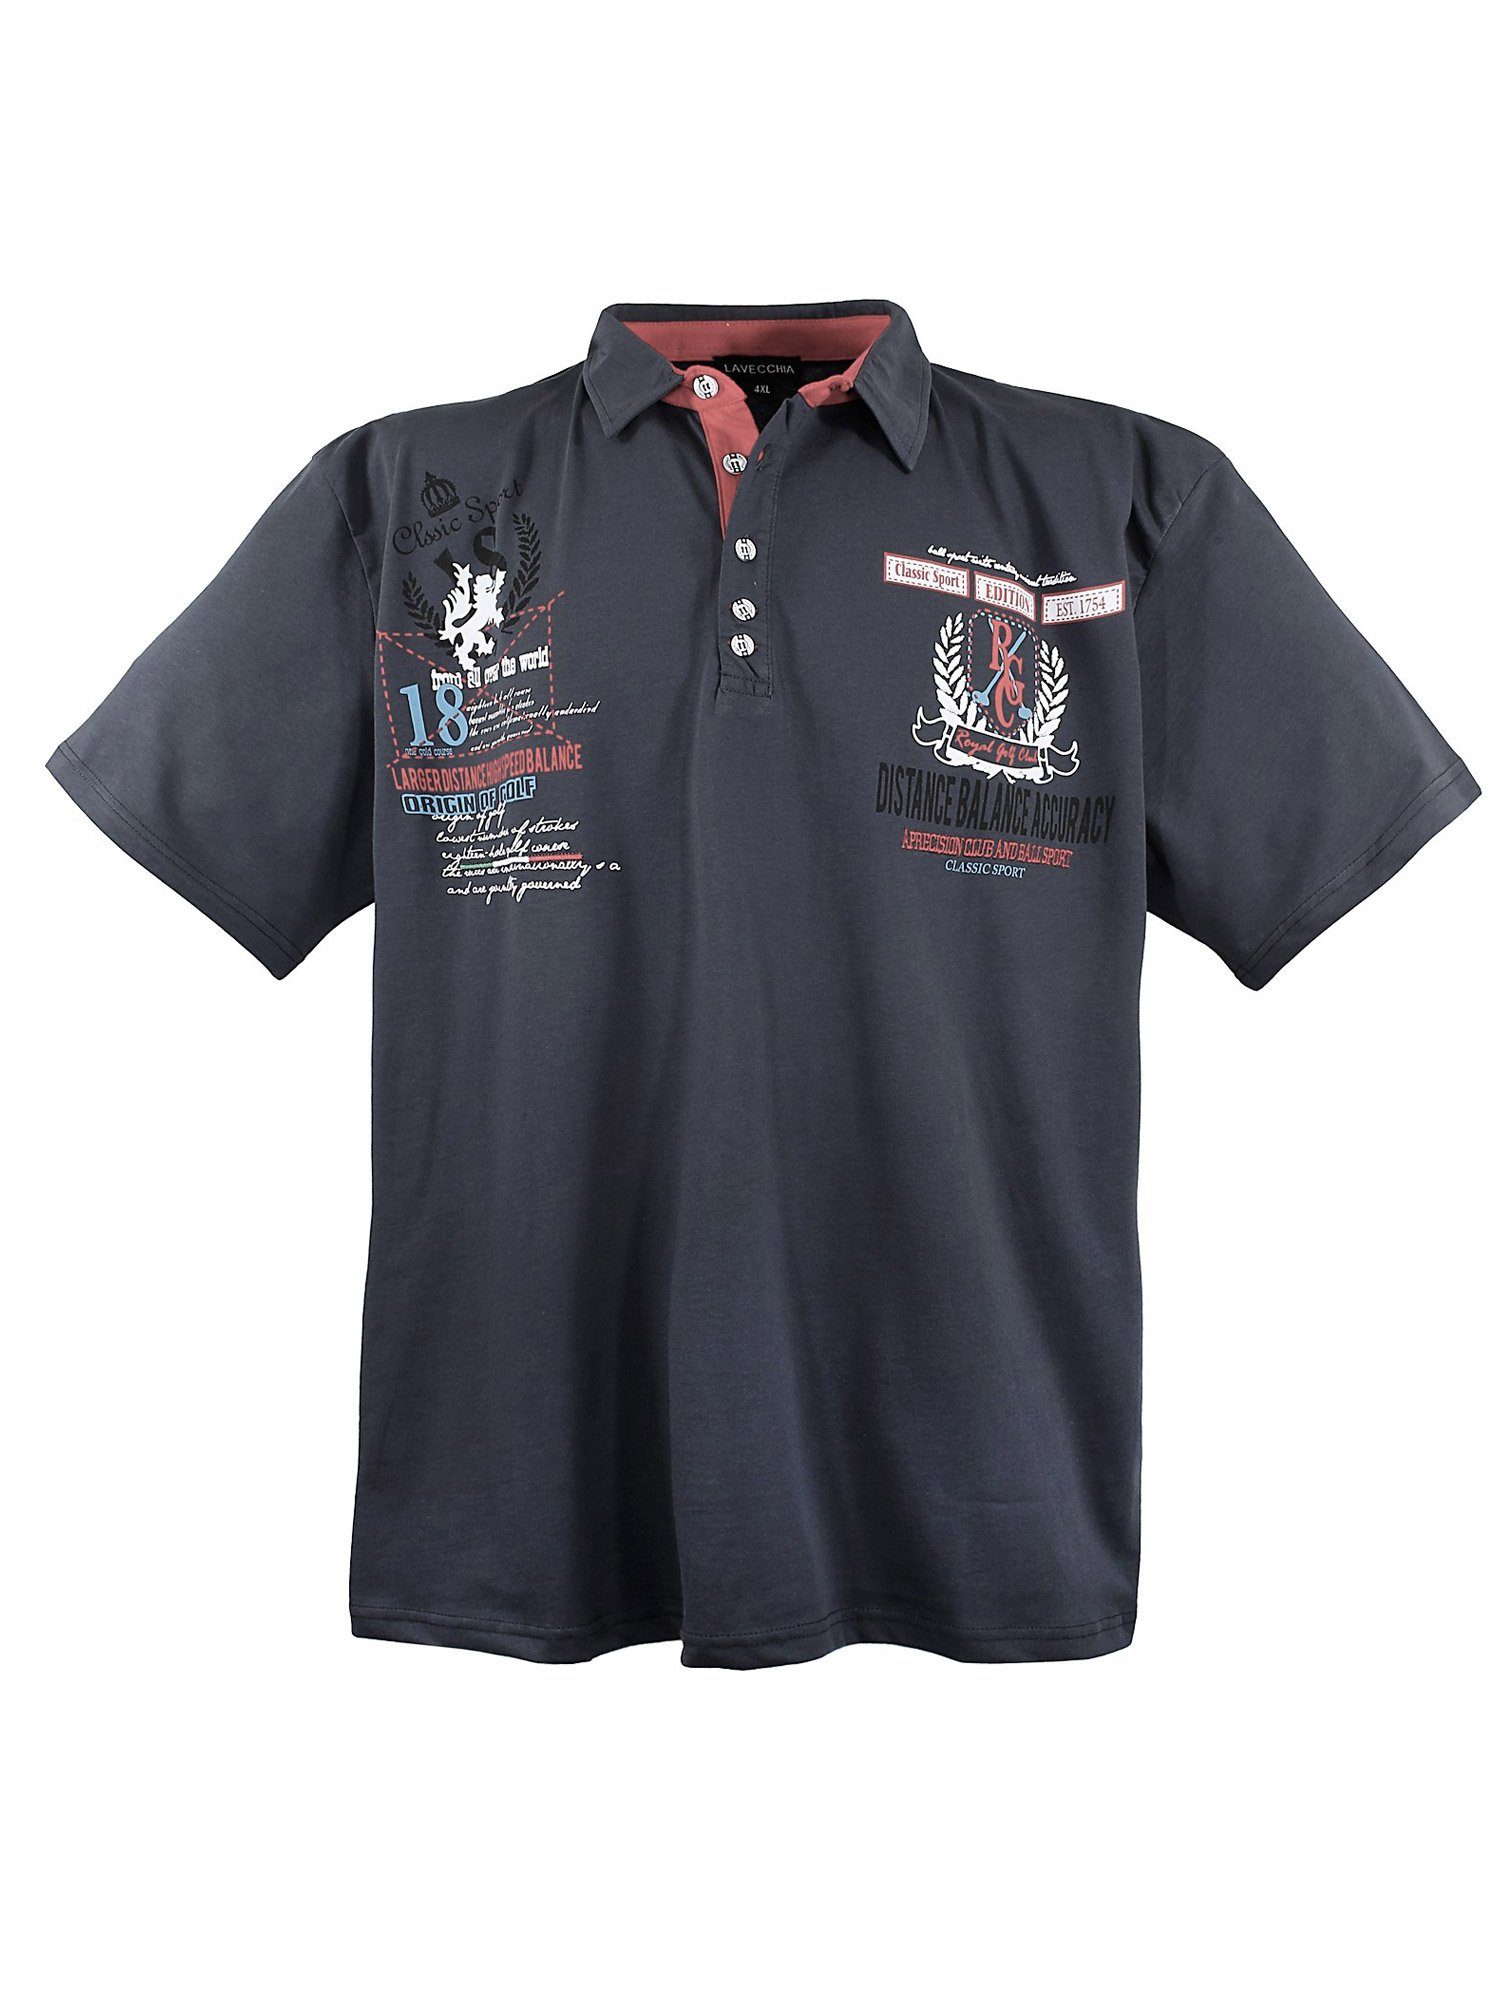 Lavecchia Poloshirt Übergrößen Herren Polo Shirt LV-2038 Herren Polo Shirt anthrazit